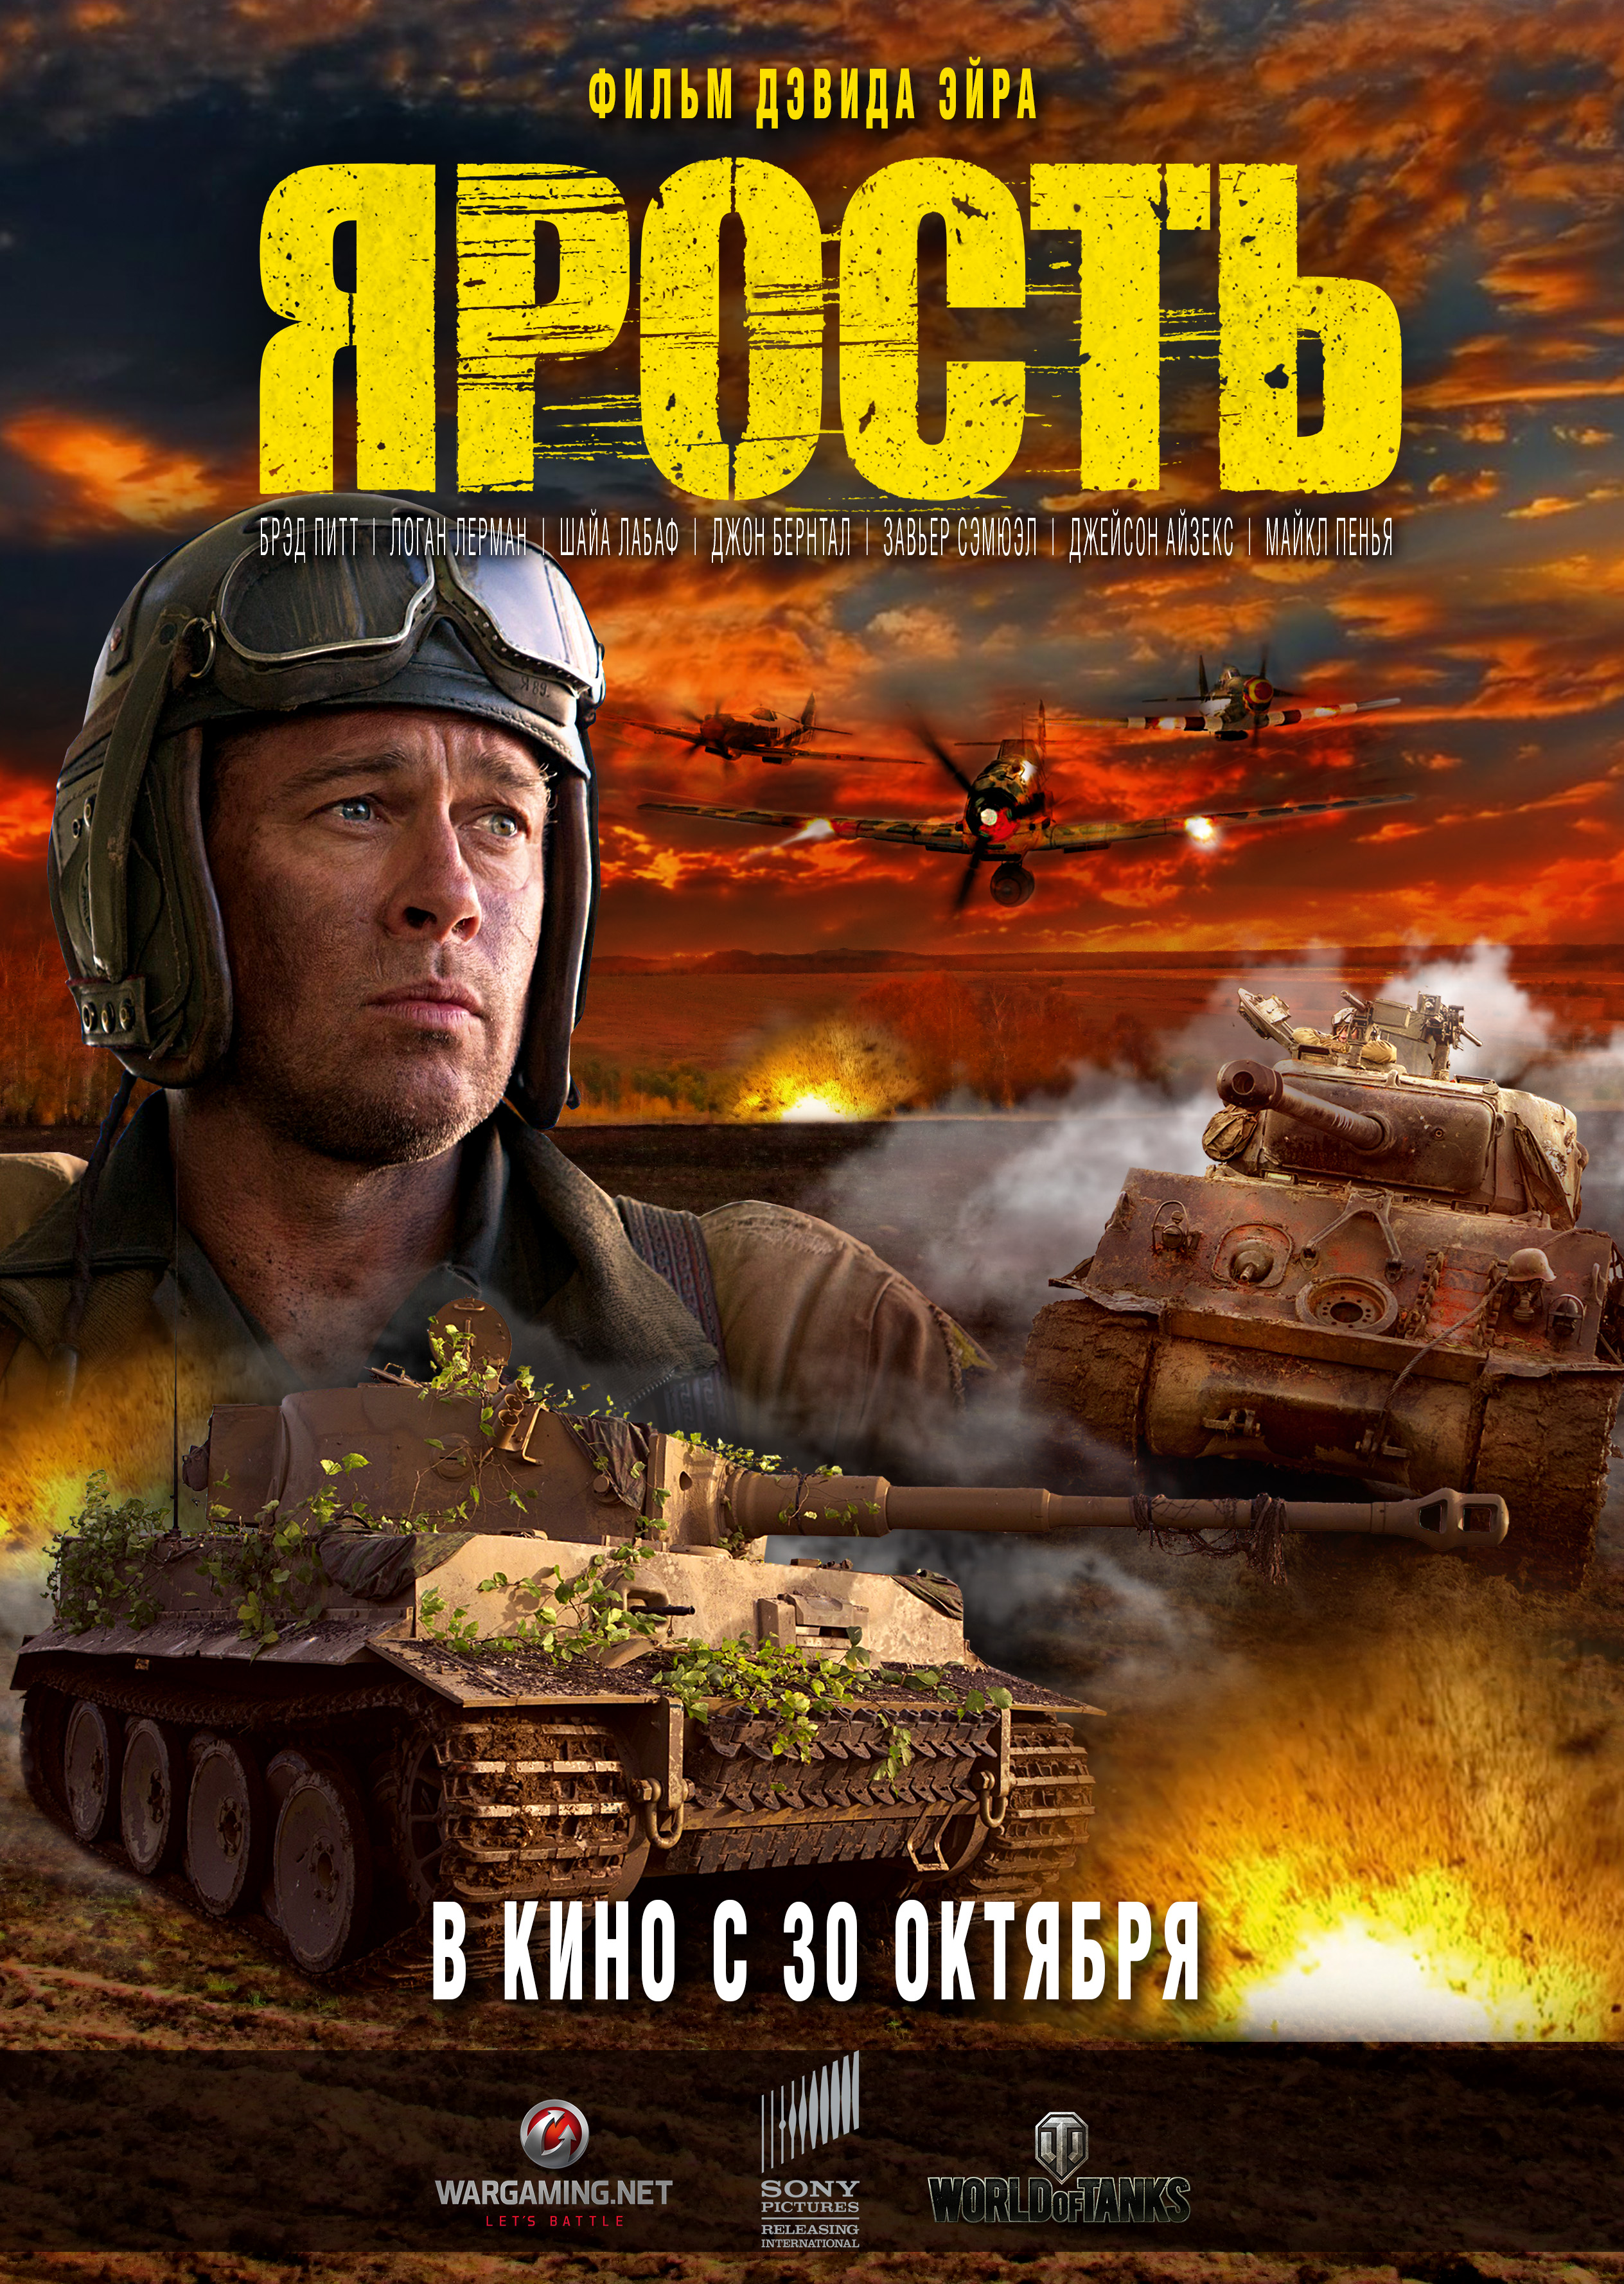 Постер на конкурс от World of Tanks